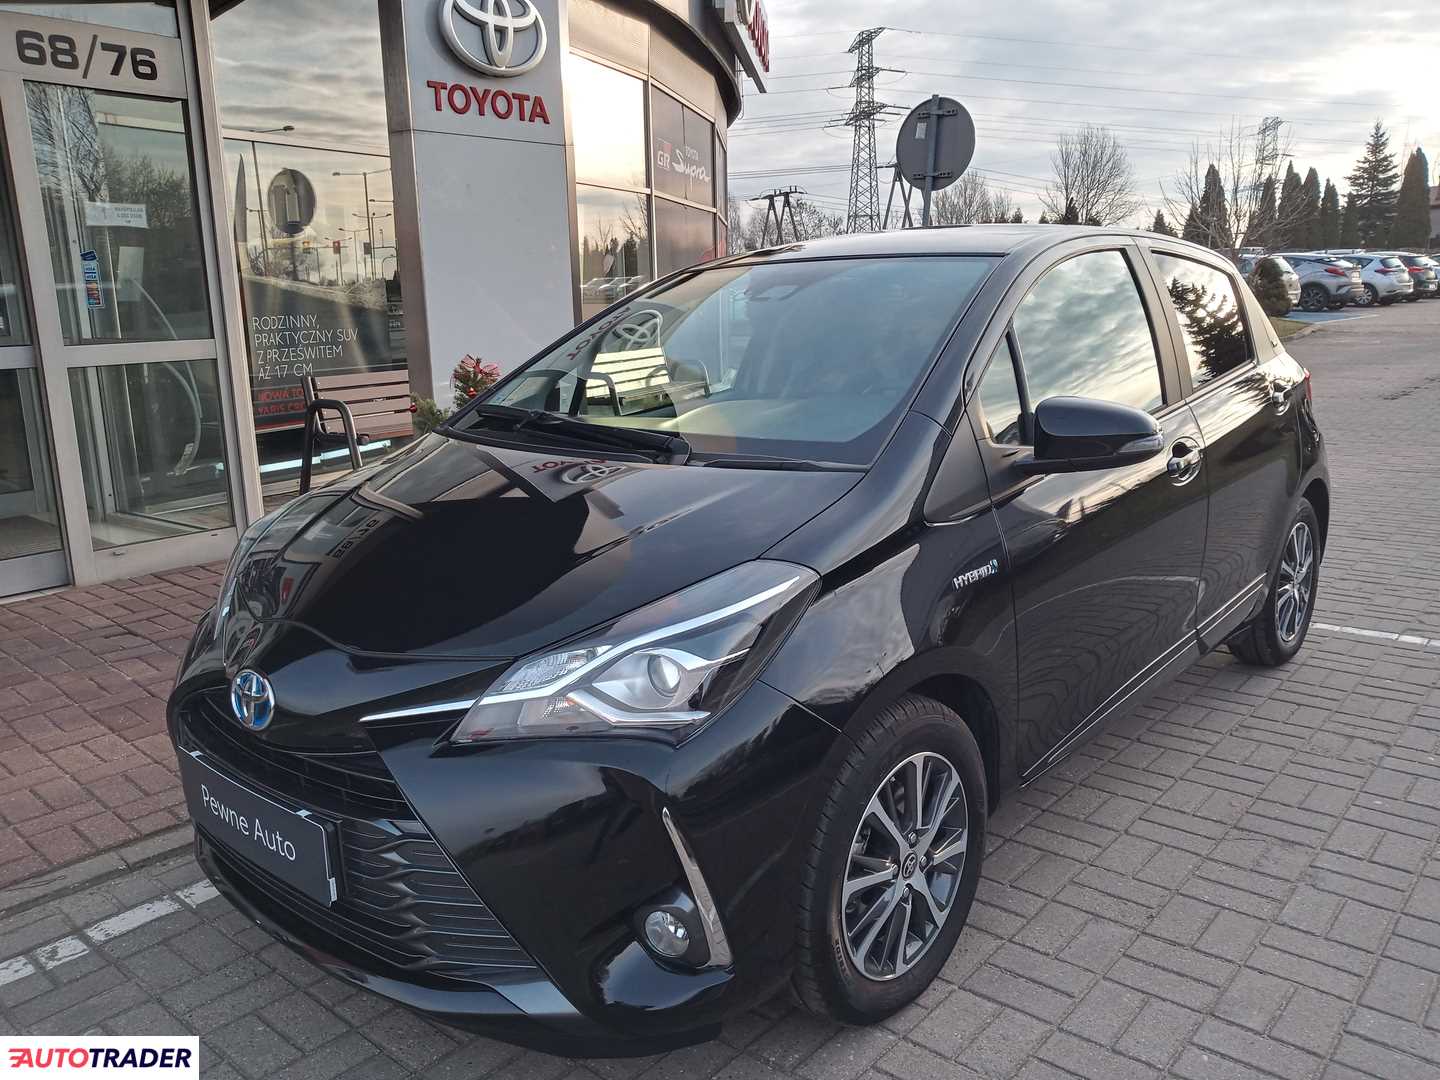 Toyota Yaris 2019 1.5 75 KM